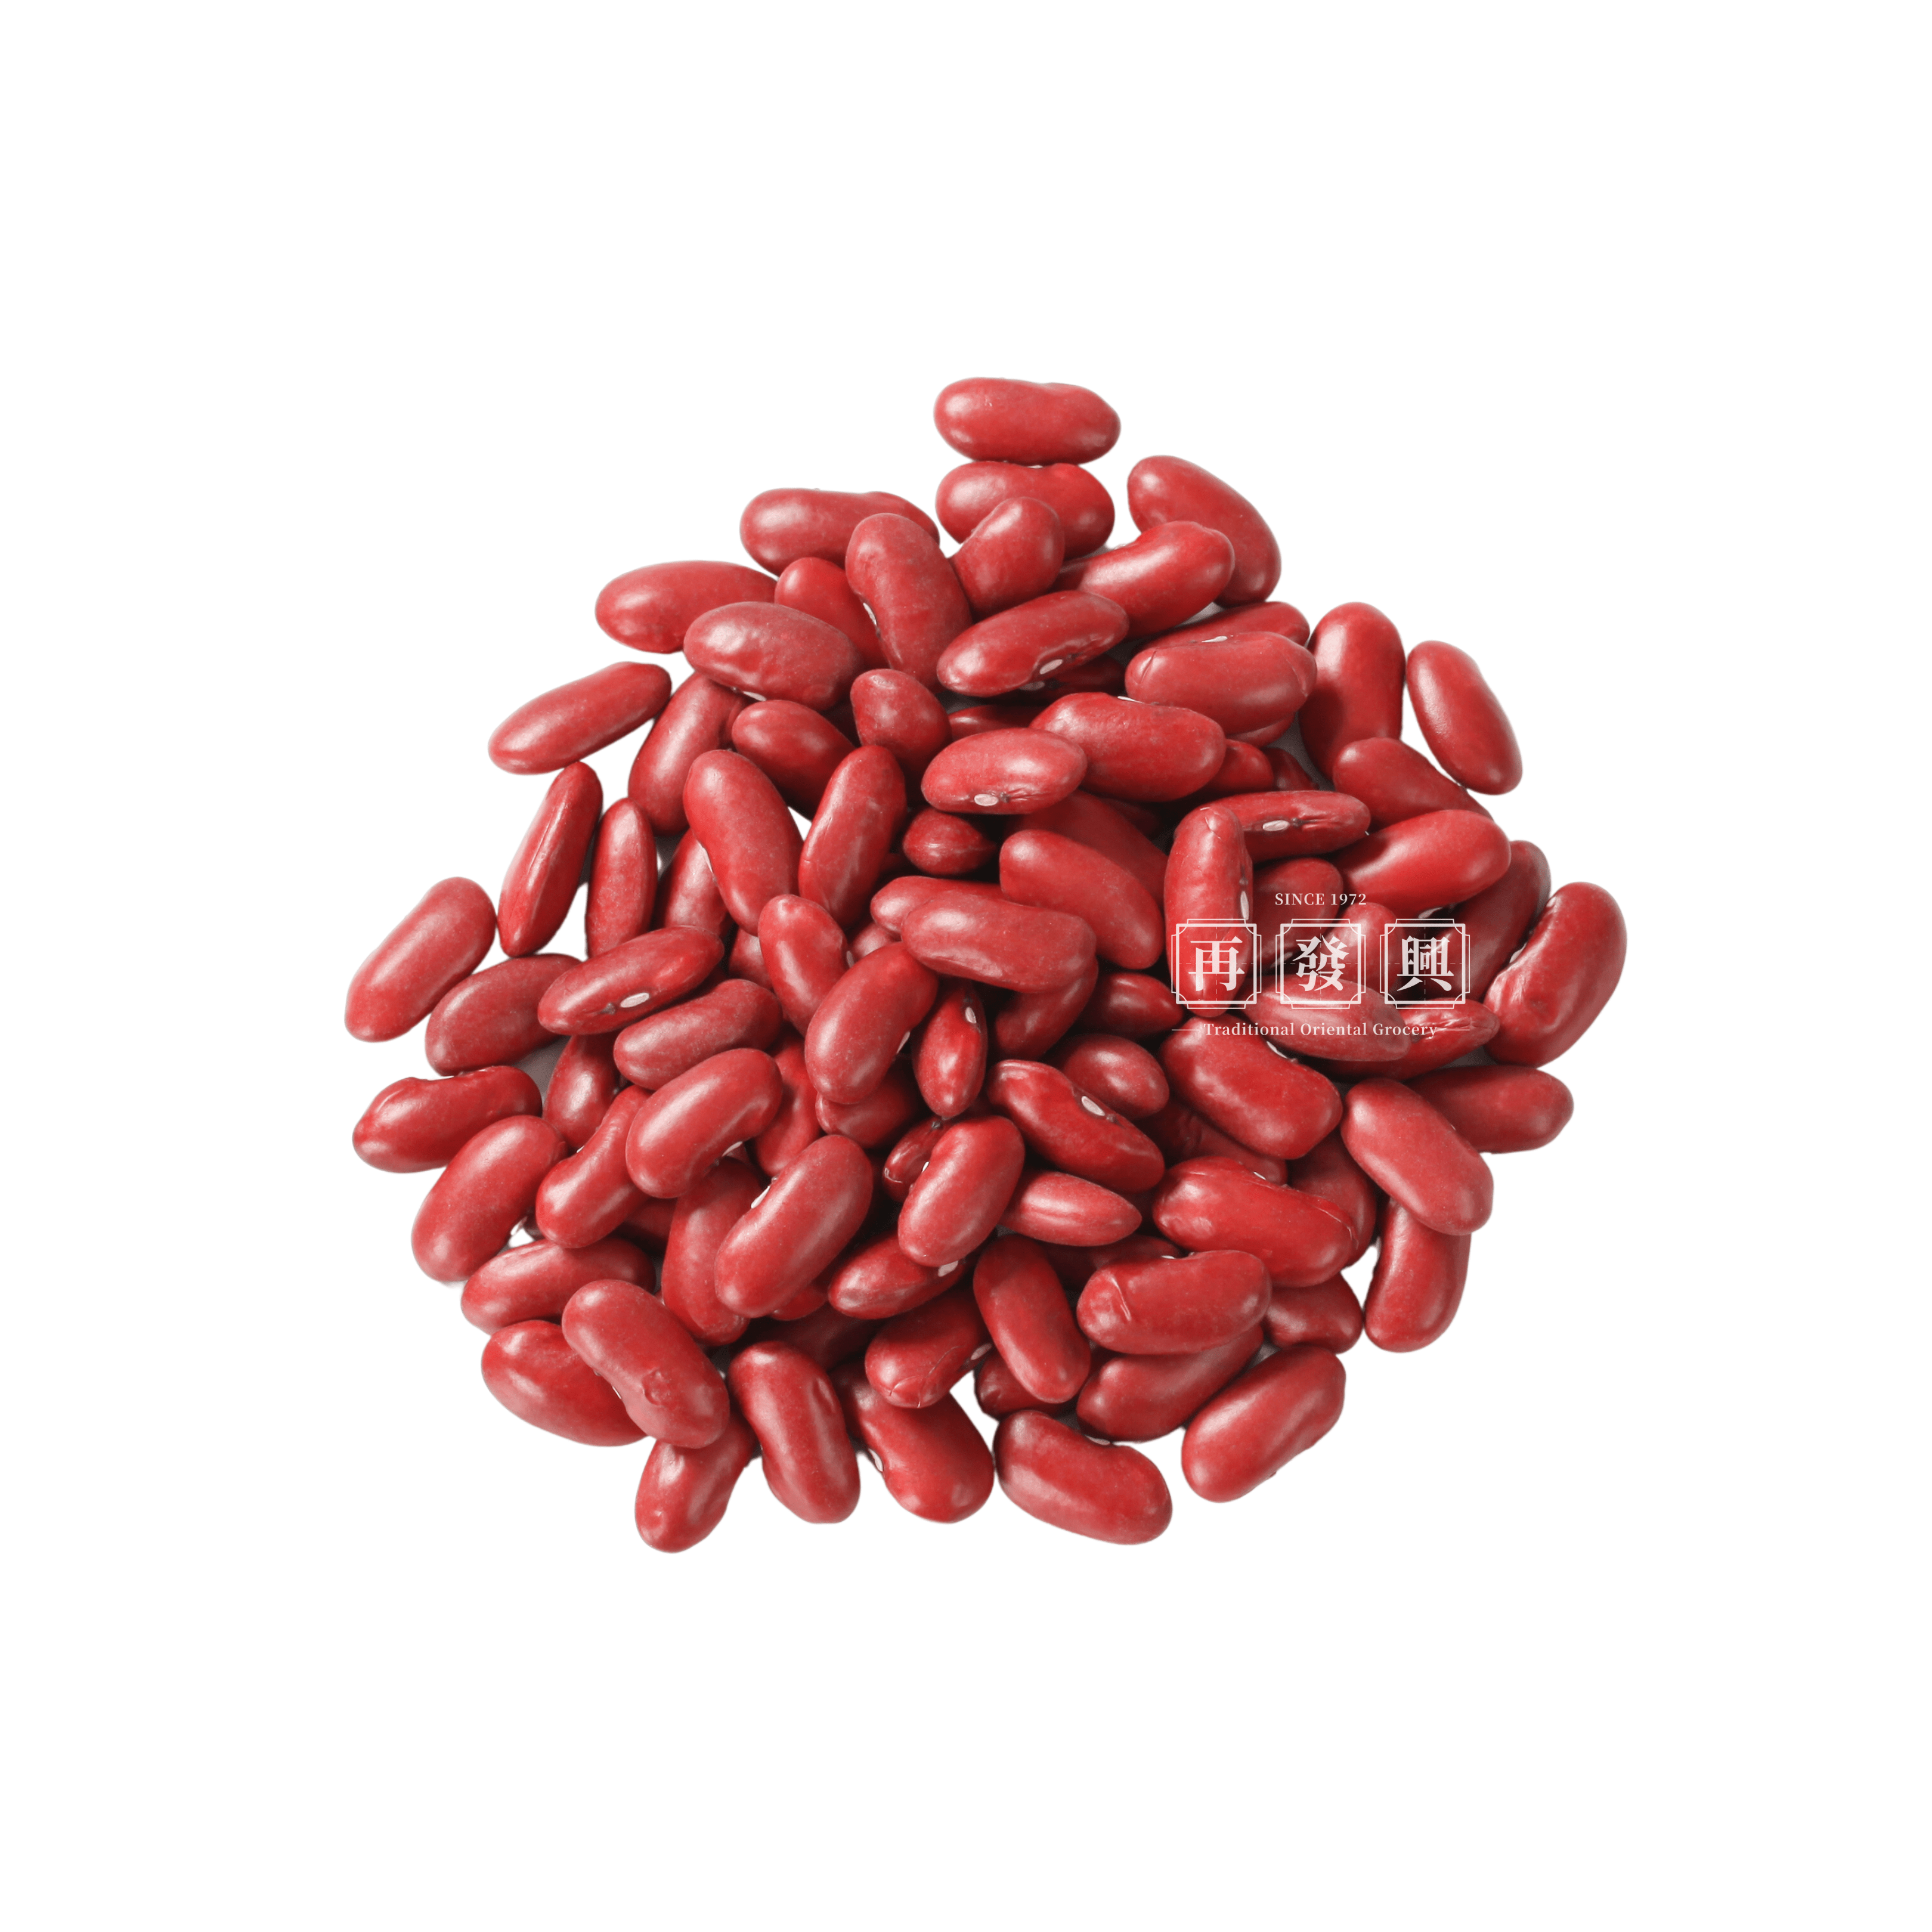 Raw Red Kidney/ABC Bean